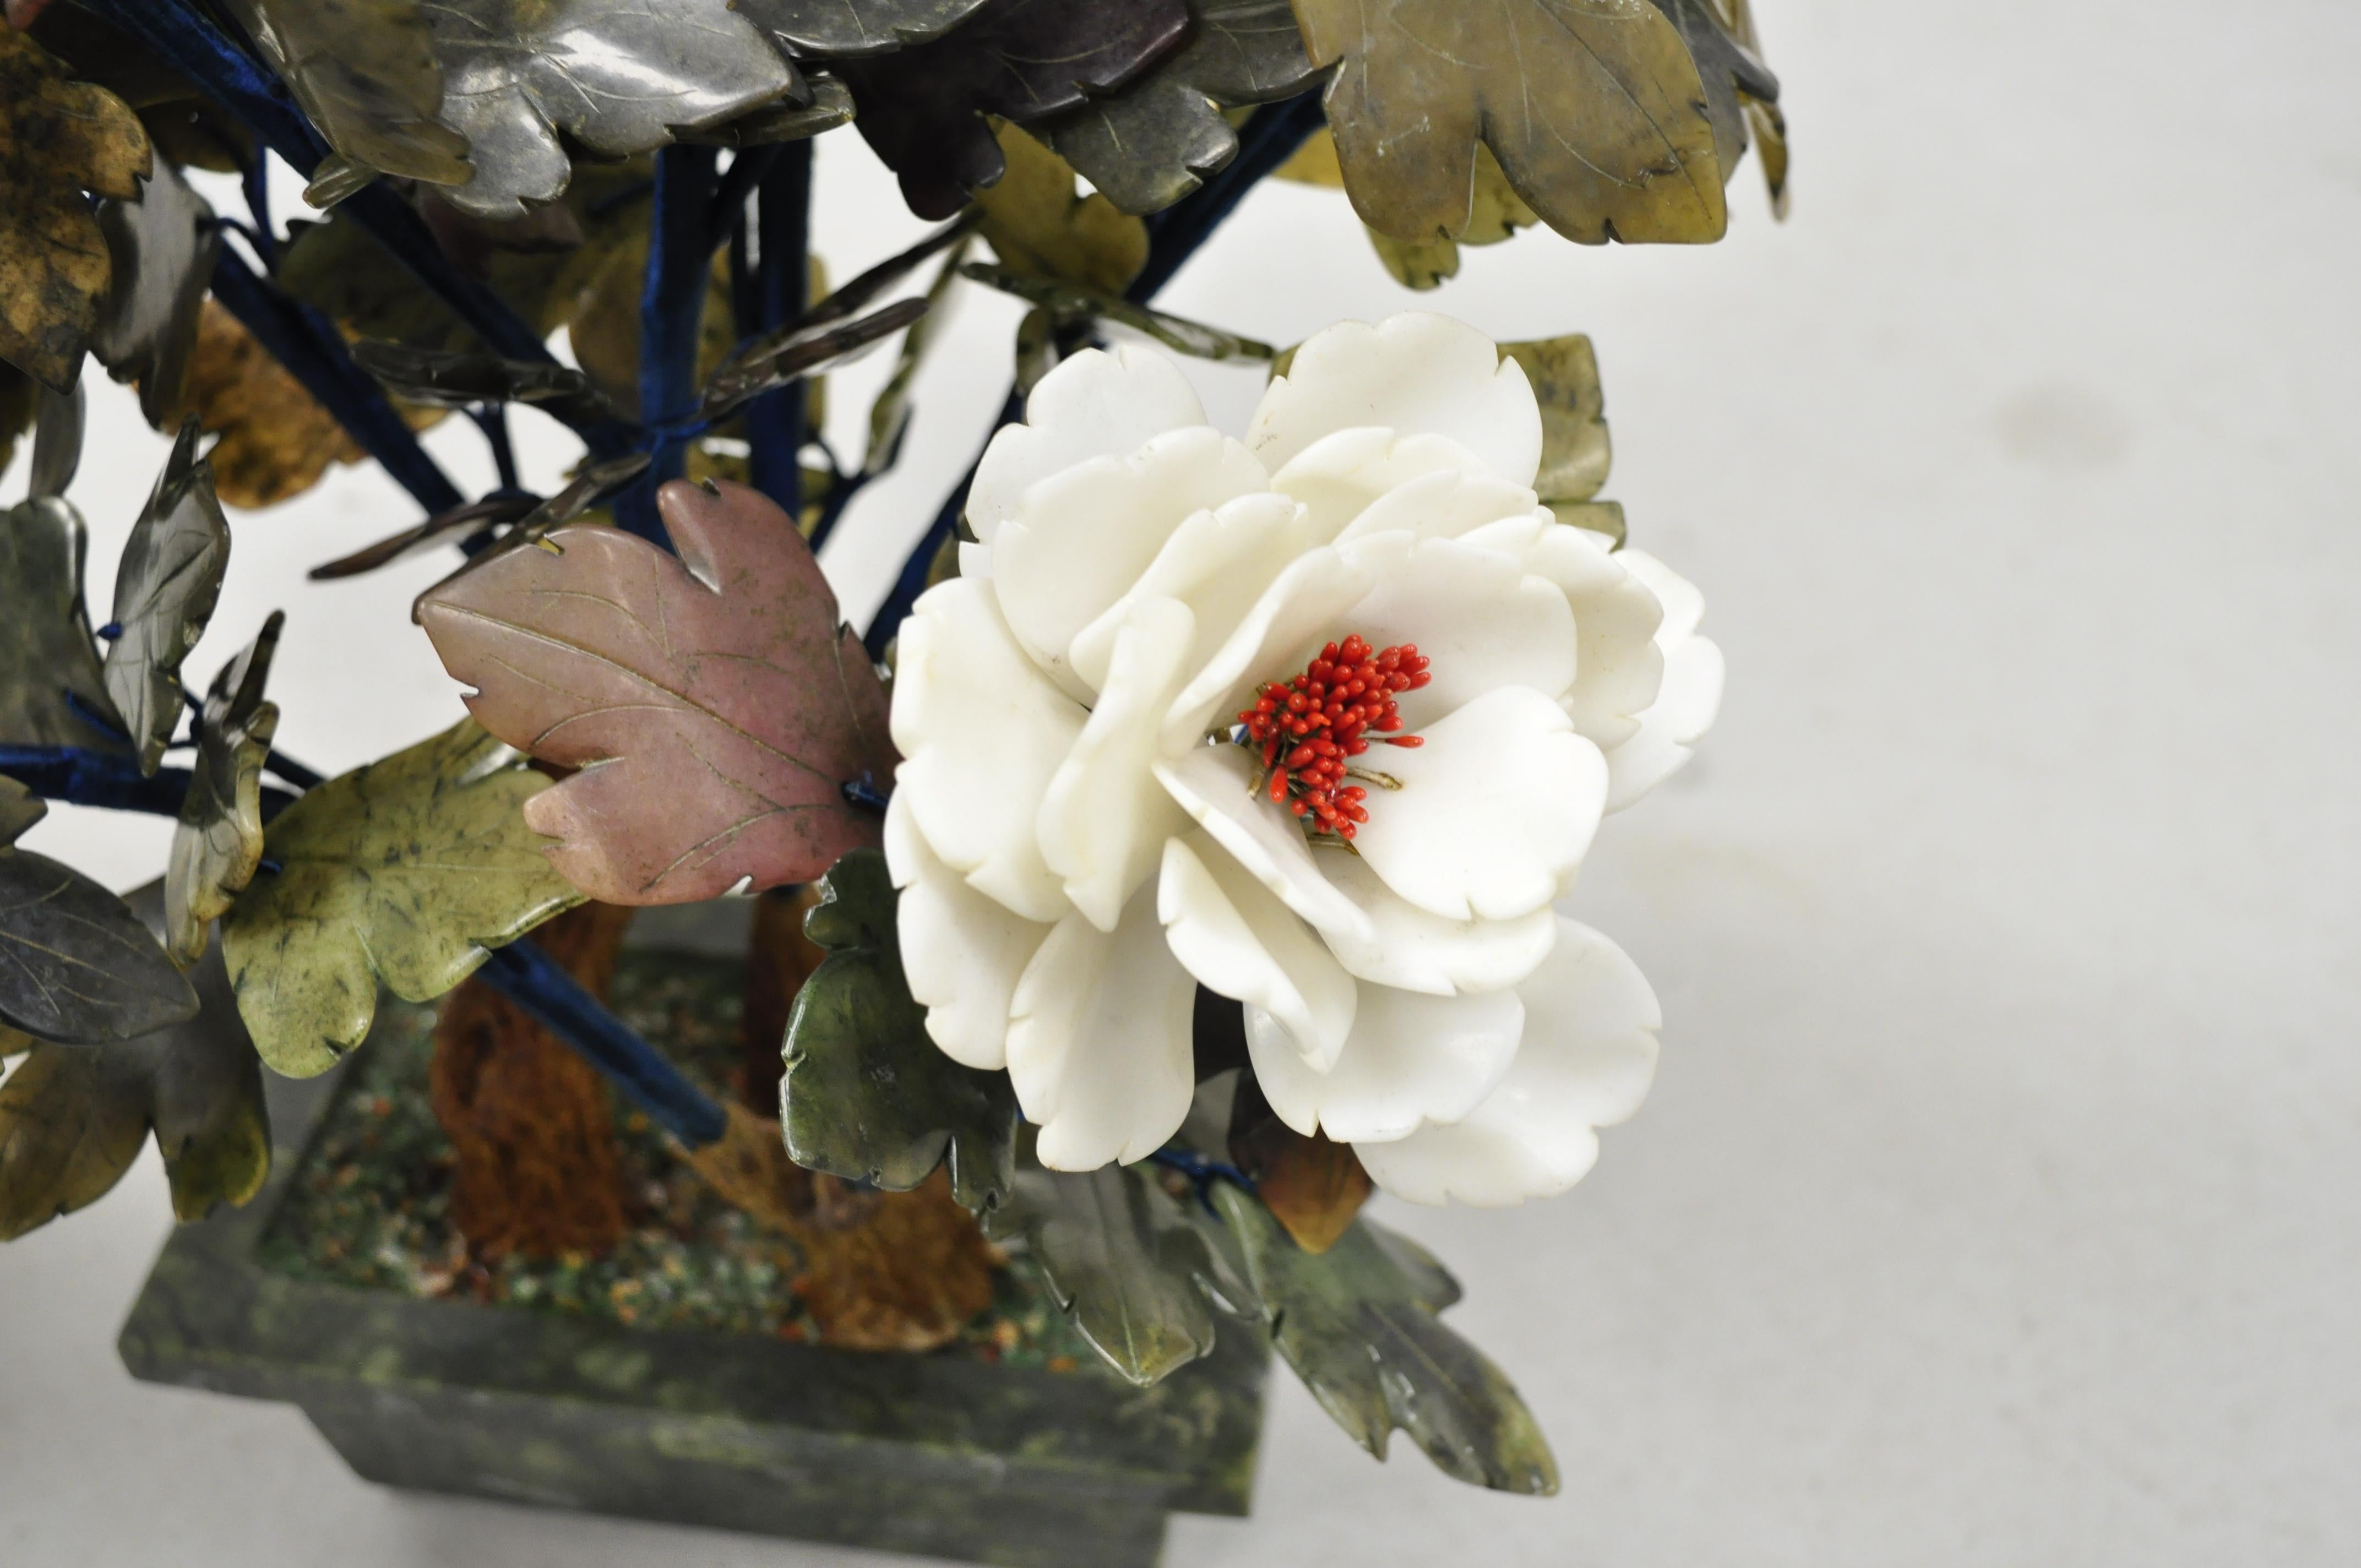 Asian Pair of Vintage Glass and Soapstone Flower Bonsai Tree Centerpiece Sculpture